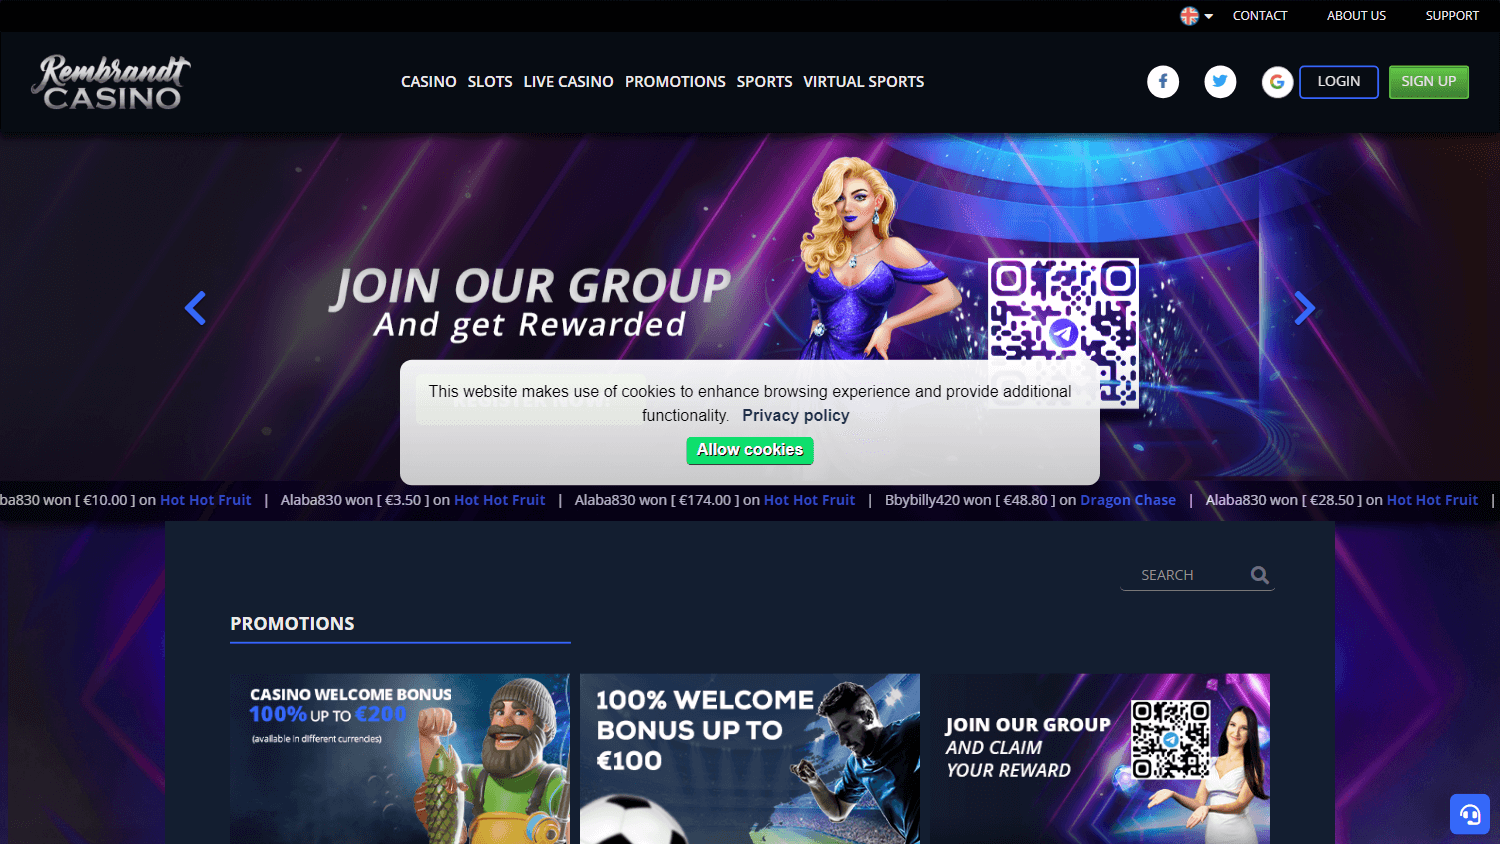 rembrandt_casino_homepage_desktop